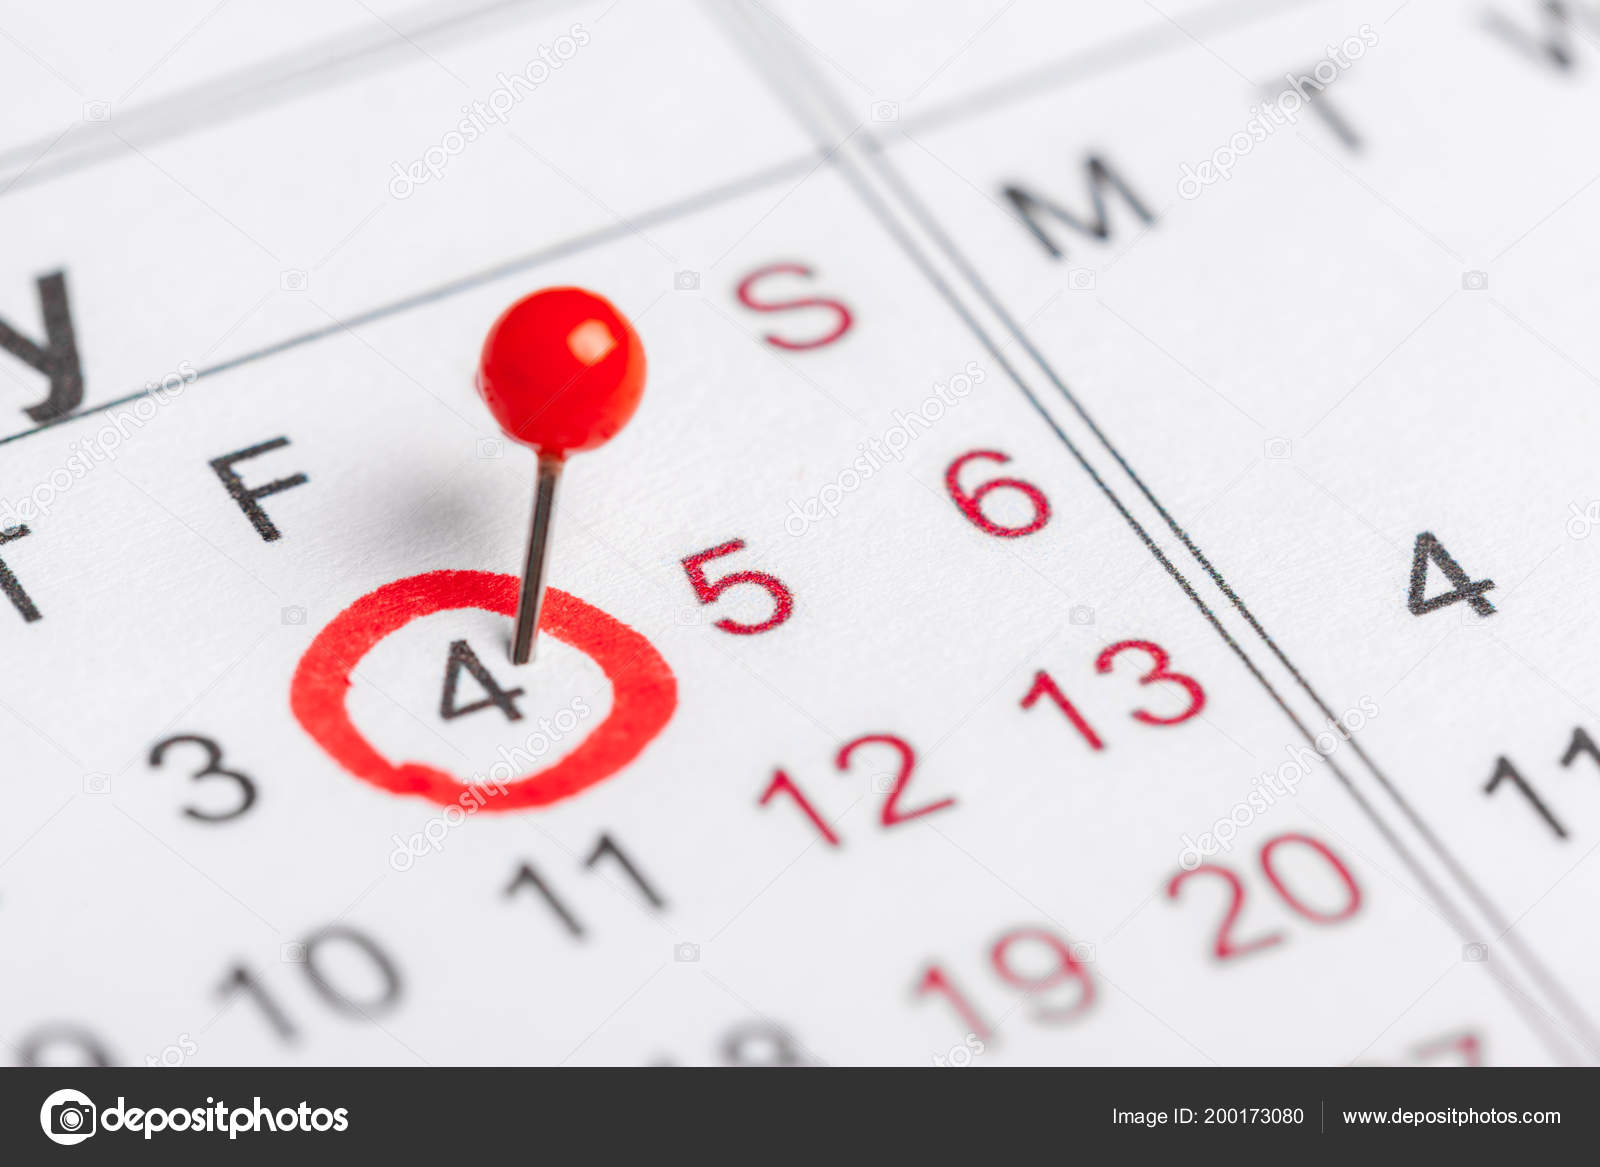 close-dates-calendar-page-marking-pin-stock-photo-by-fotofabrika-200173080